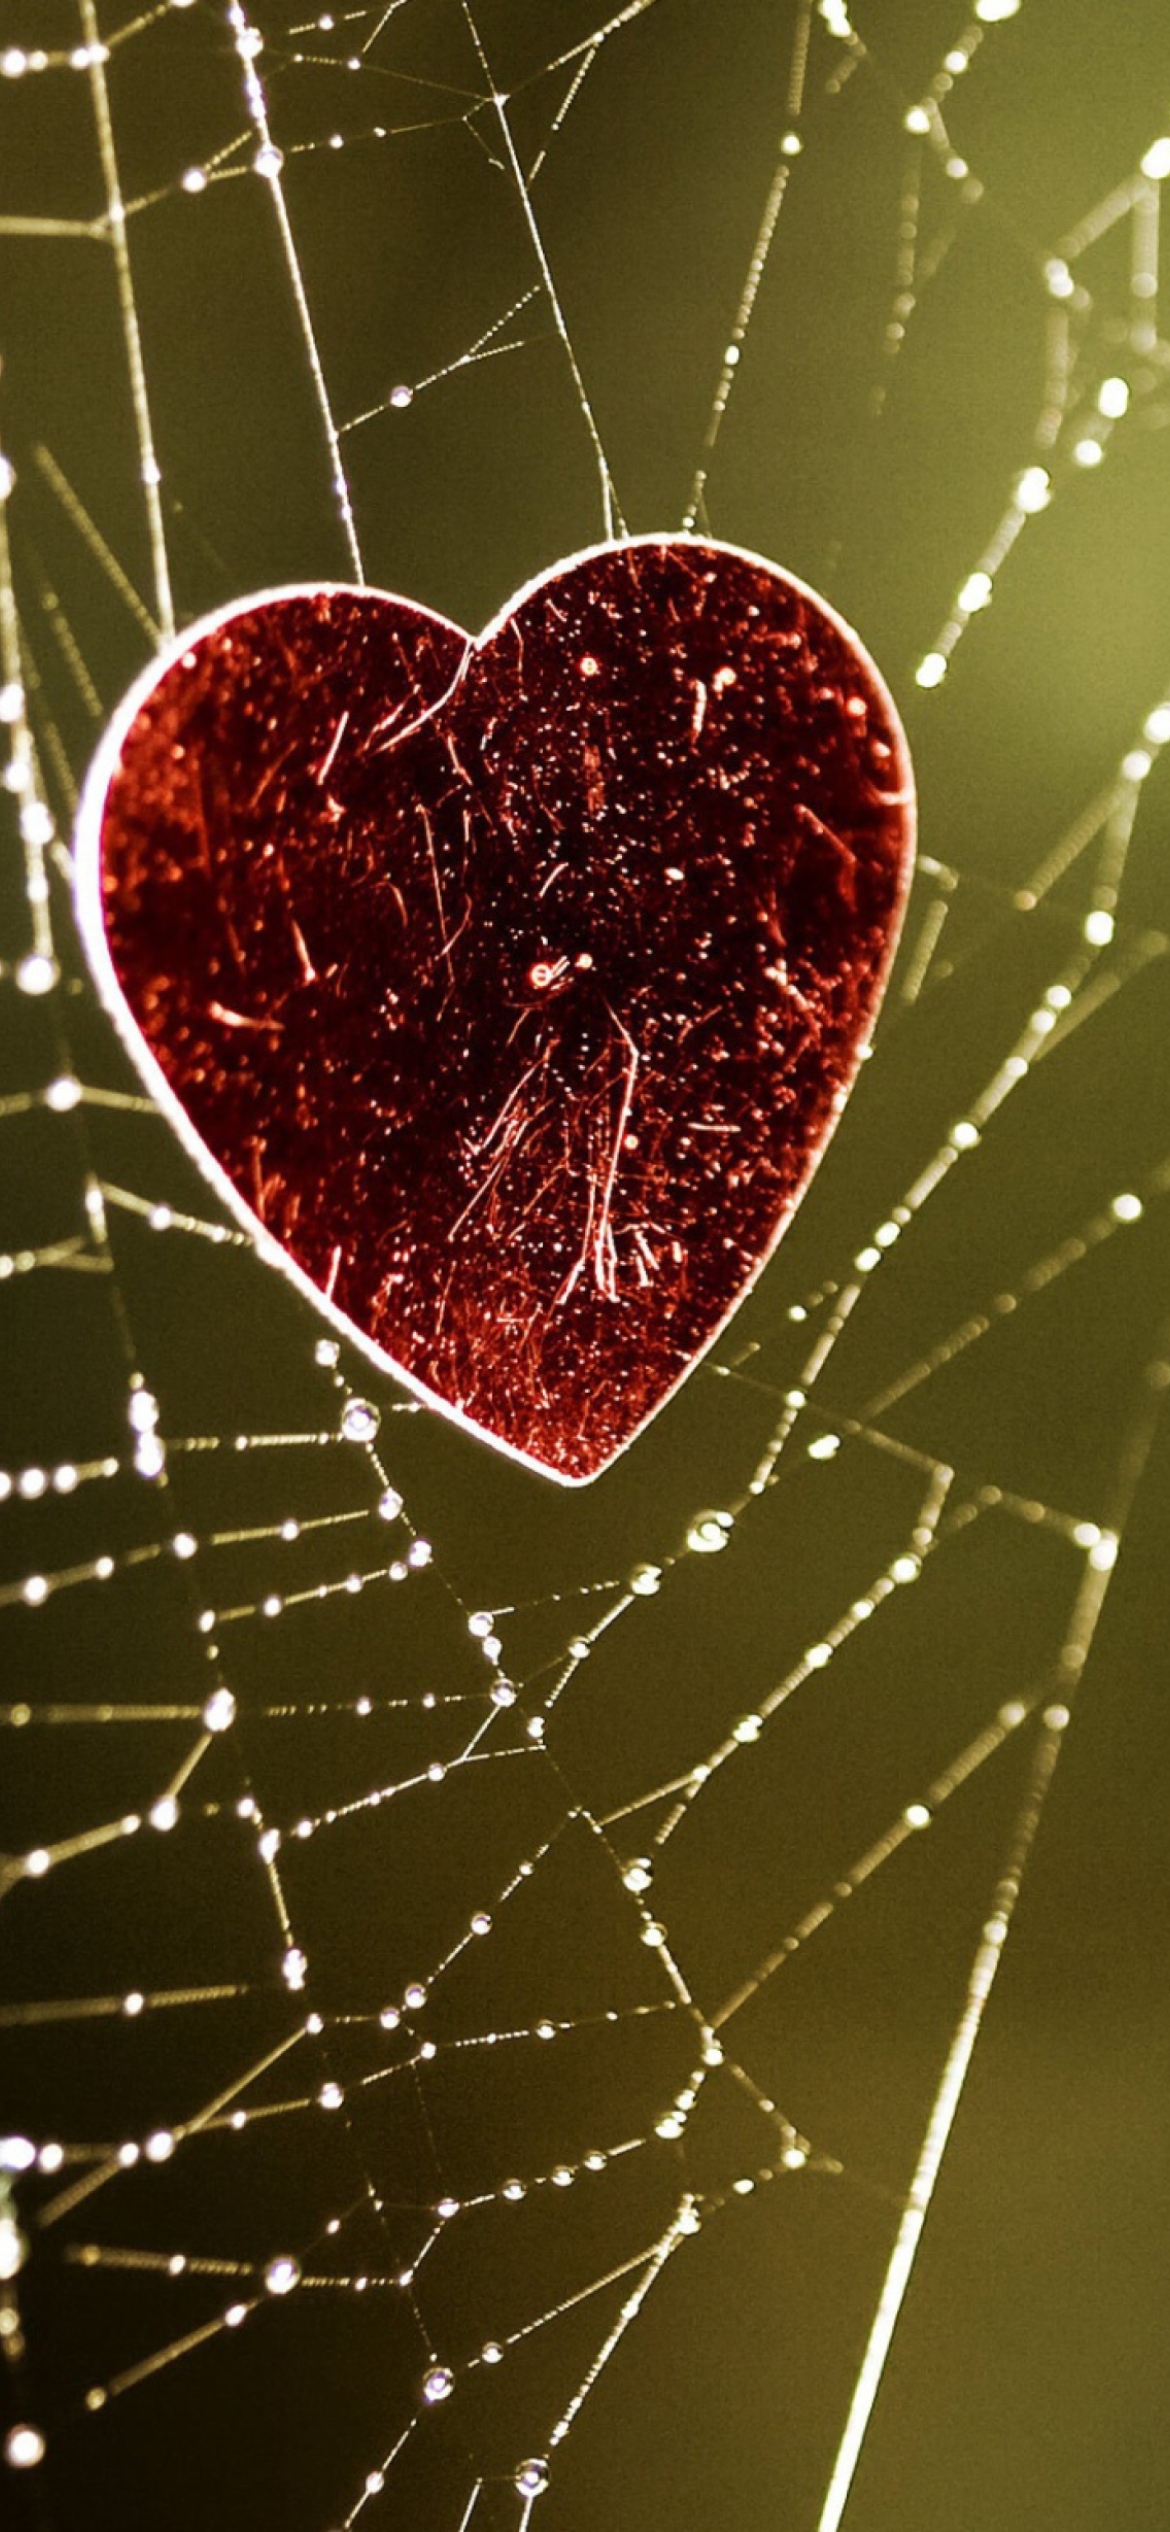 Heart In Spider Web wallpaper 1170x2532